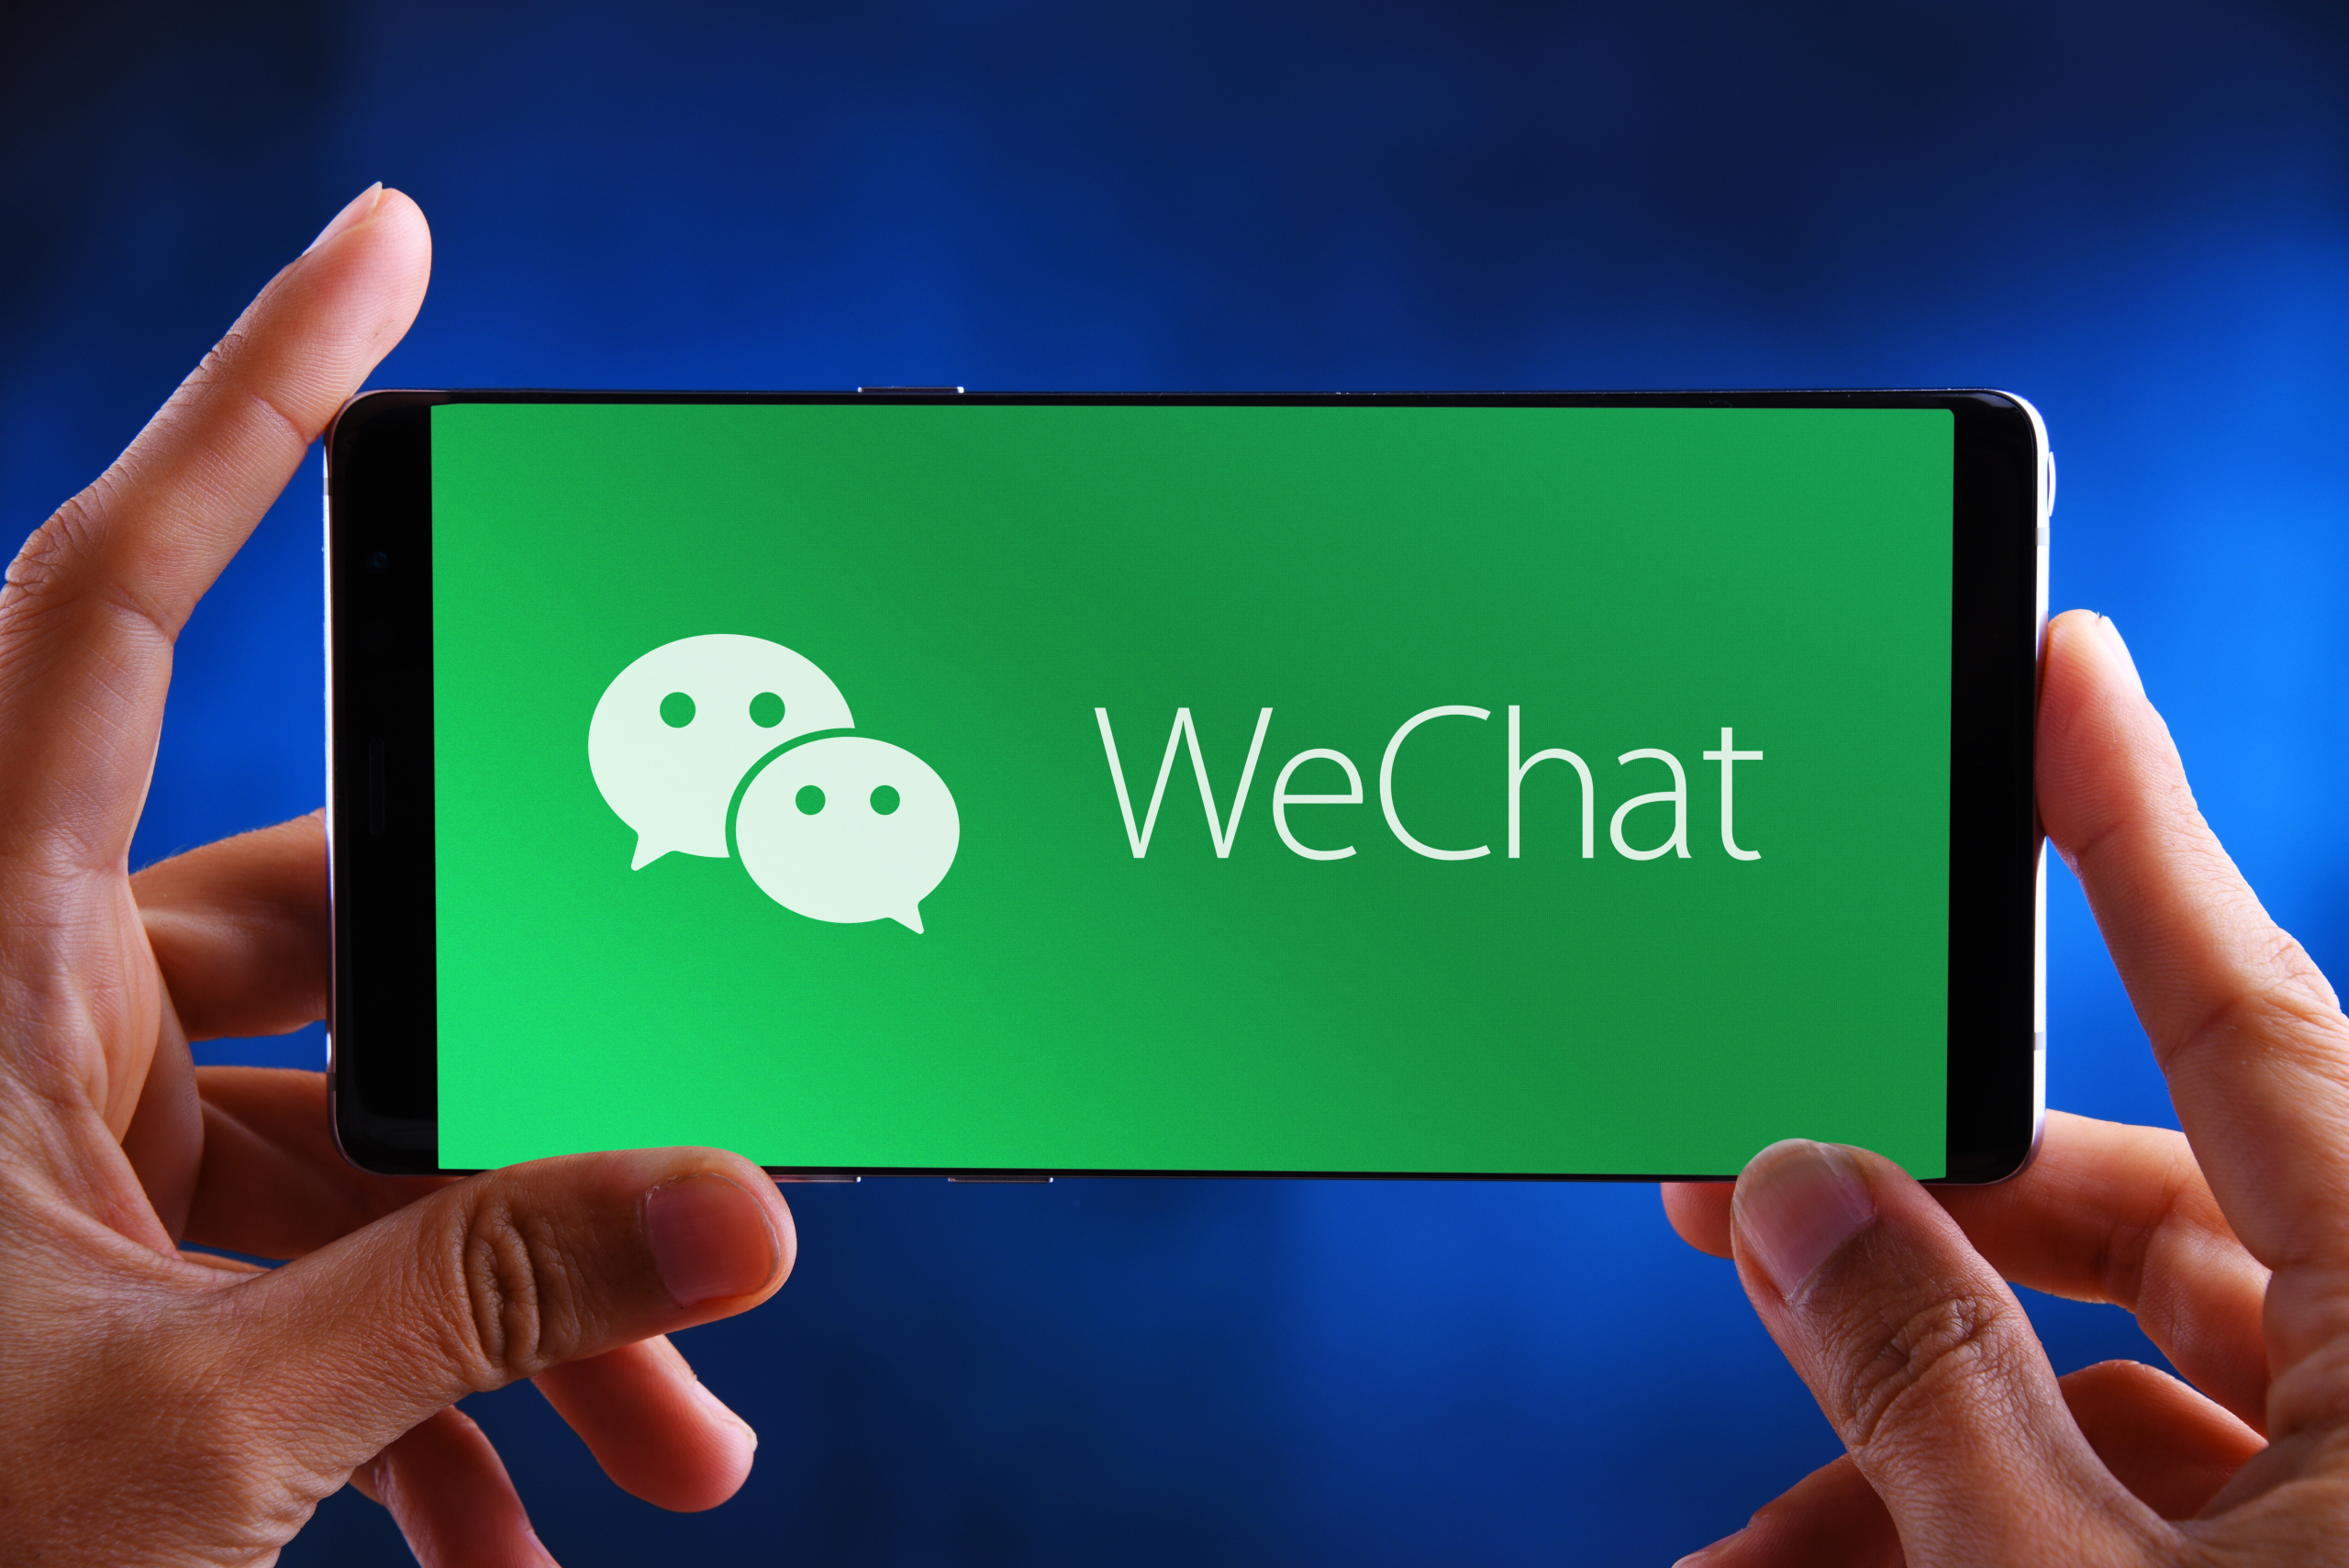 WeChat integrates digital Yuan into payment platform
